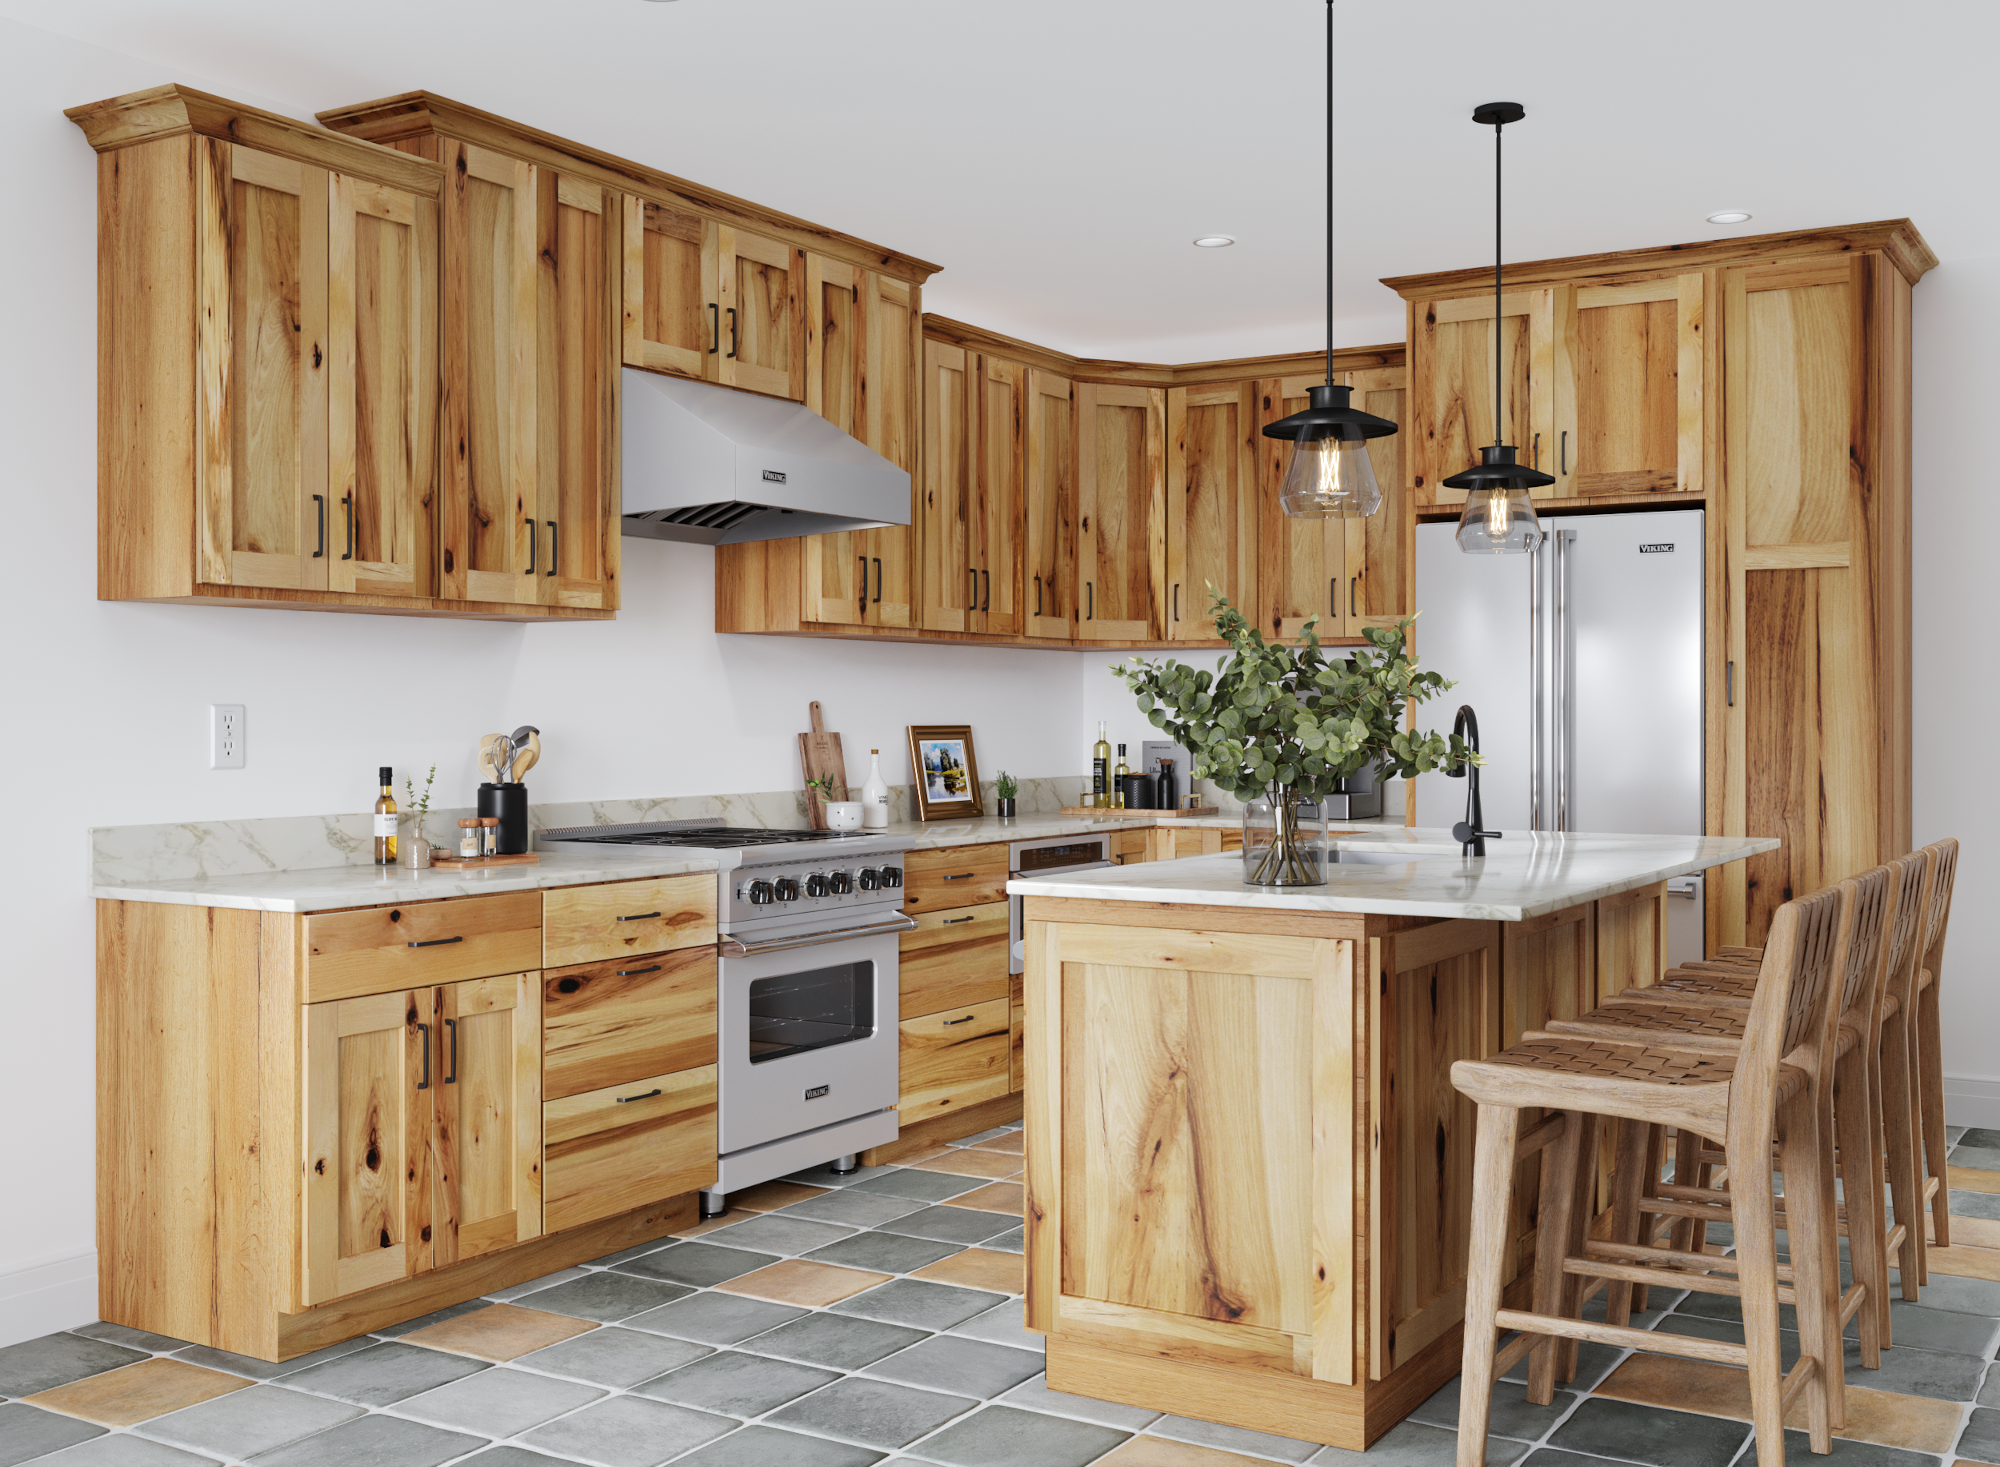 tall kitchen cabinet, Tall kitchen cabinet with pullout drawers., DEFINITELY WANT T…